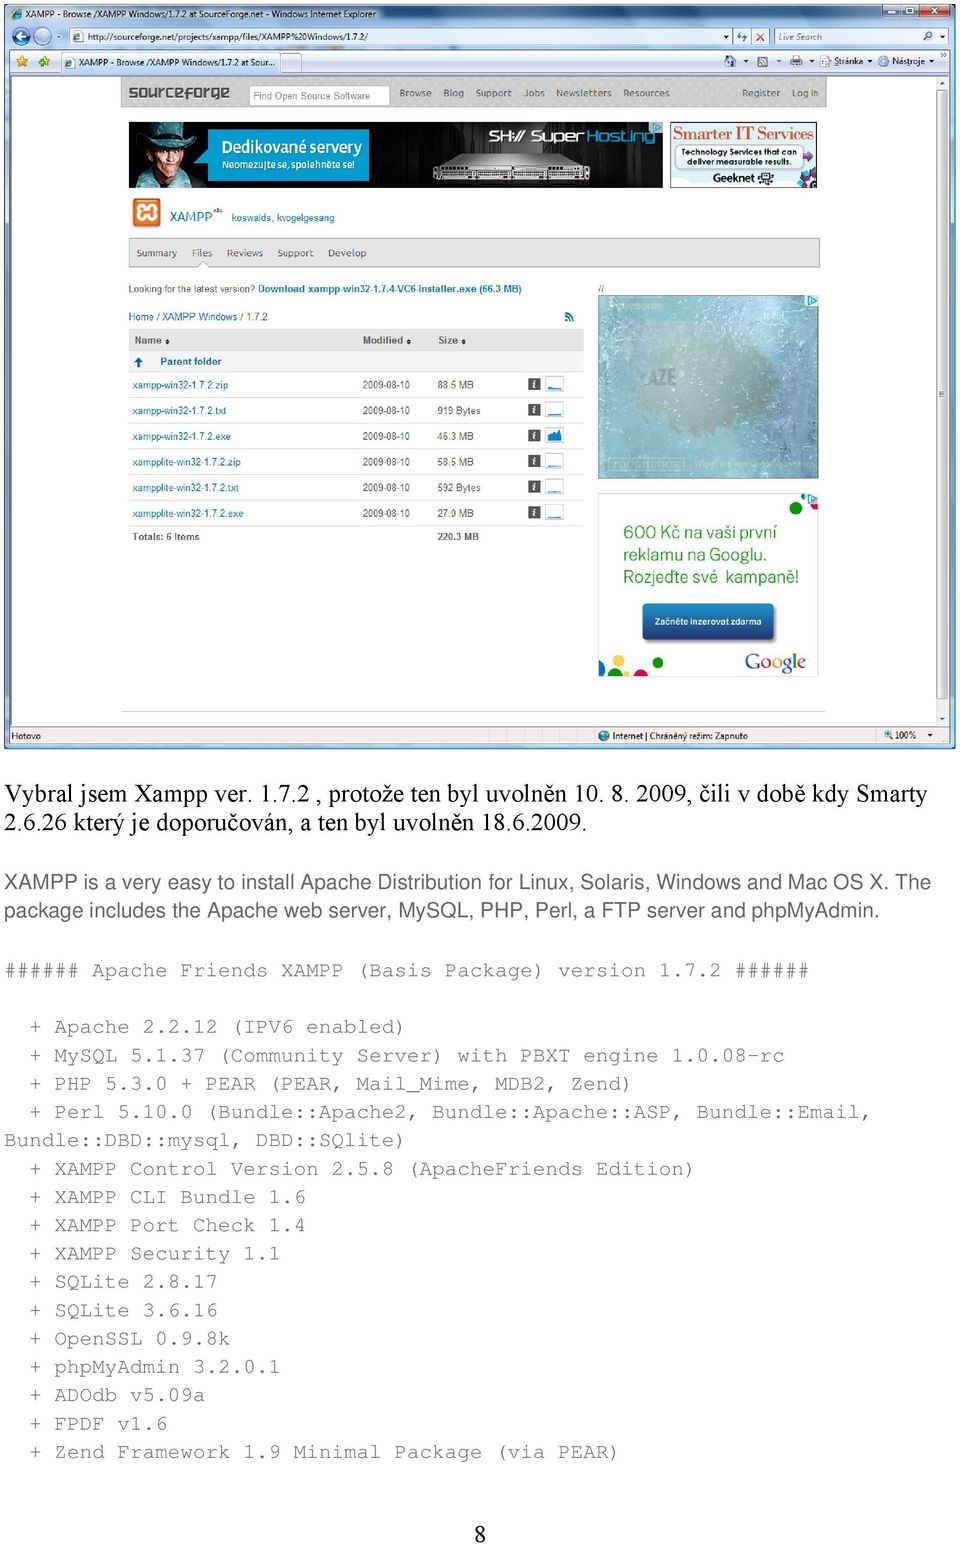 0.08-rc + PHP 5.3.0 + PEAR (PEAR, Mail_Mime, MDB2, Zend) + Perl 5.10.0 (Bundle::Apache2, Bundle::Apache::ASP, Bundle::Email, Bundle::DBD::mysql, DBD::SQlite) + XAMPP Control Version 2.5.8 (ApacheFriends Edition) + XAMPP CLI Bundle 1.